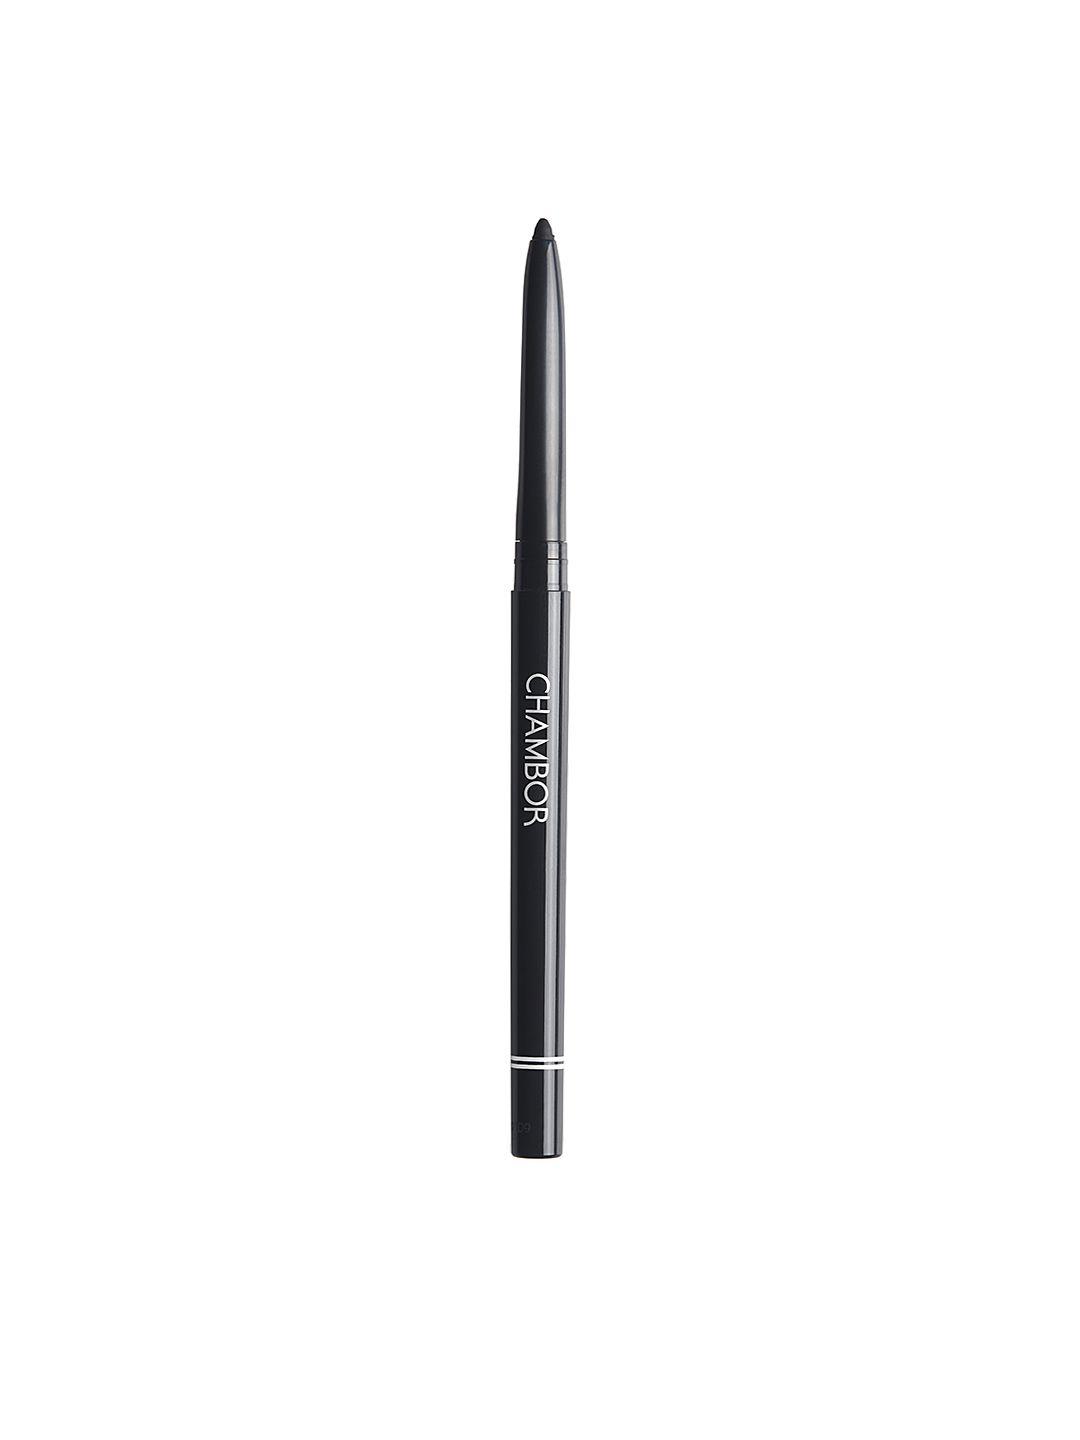 chambor-intense-definition-gel-eyeliner-pencil---blackest-black-101-0.25-g